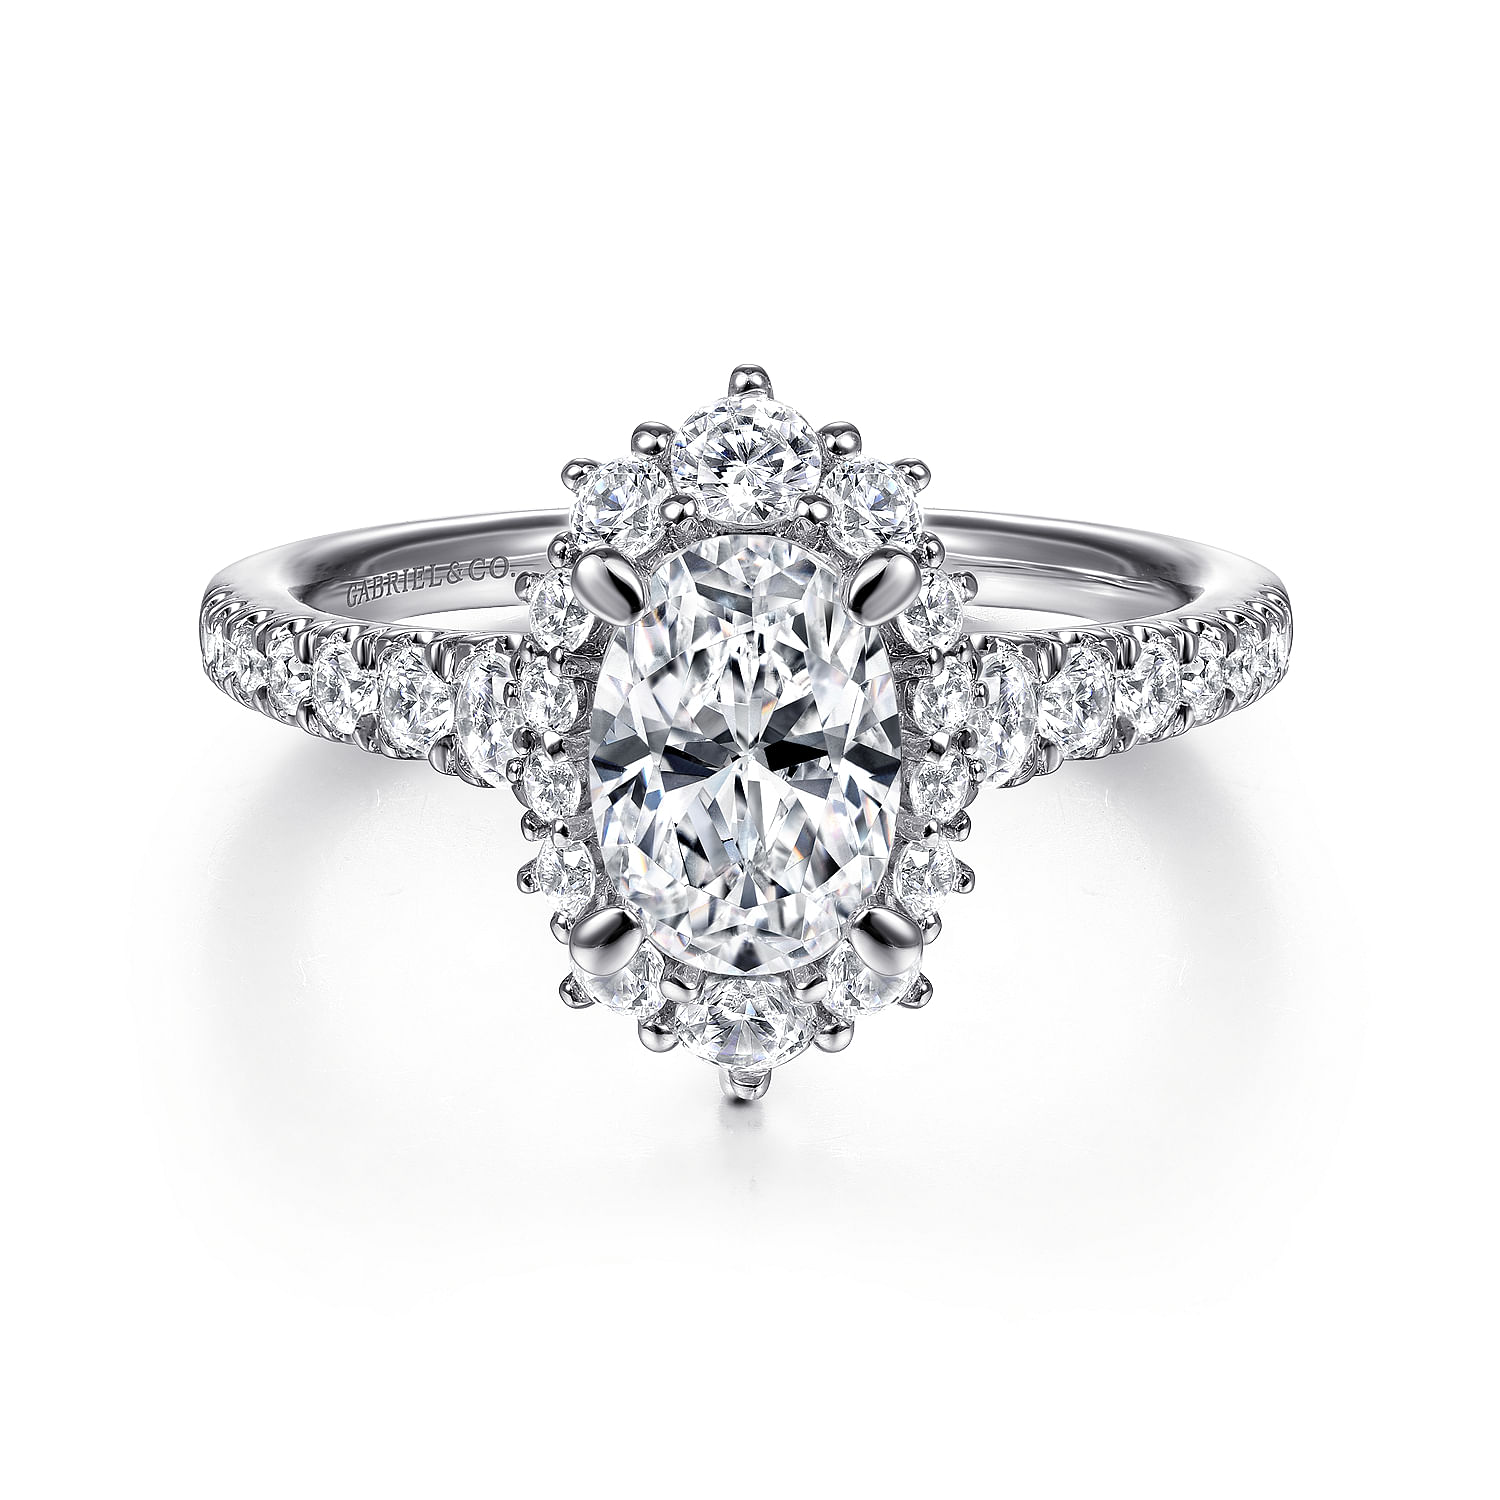 Eugenia---14K-White-Gold-Oval-Halo-Diamond-Engagement-Ring1